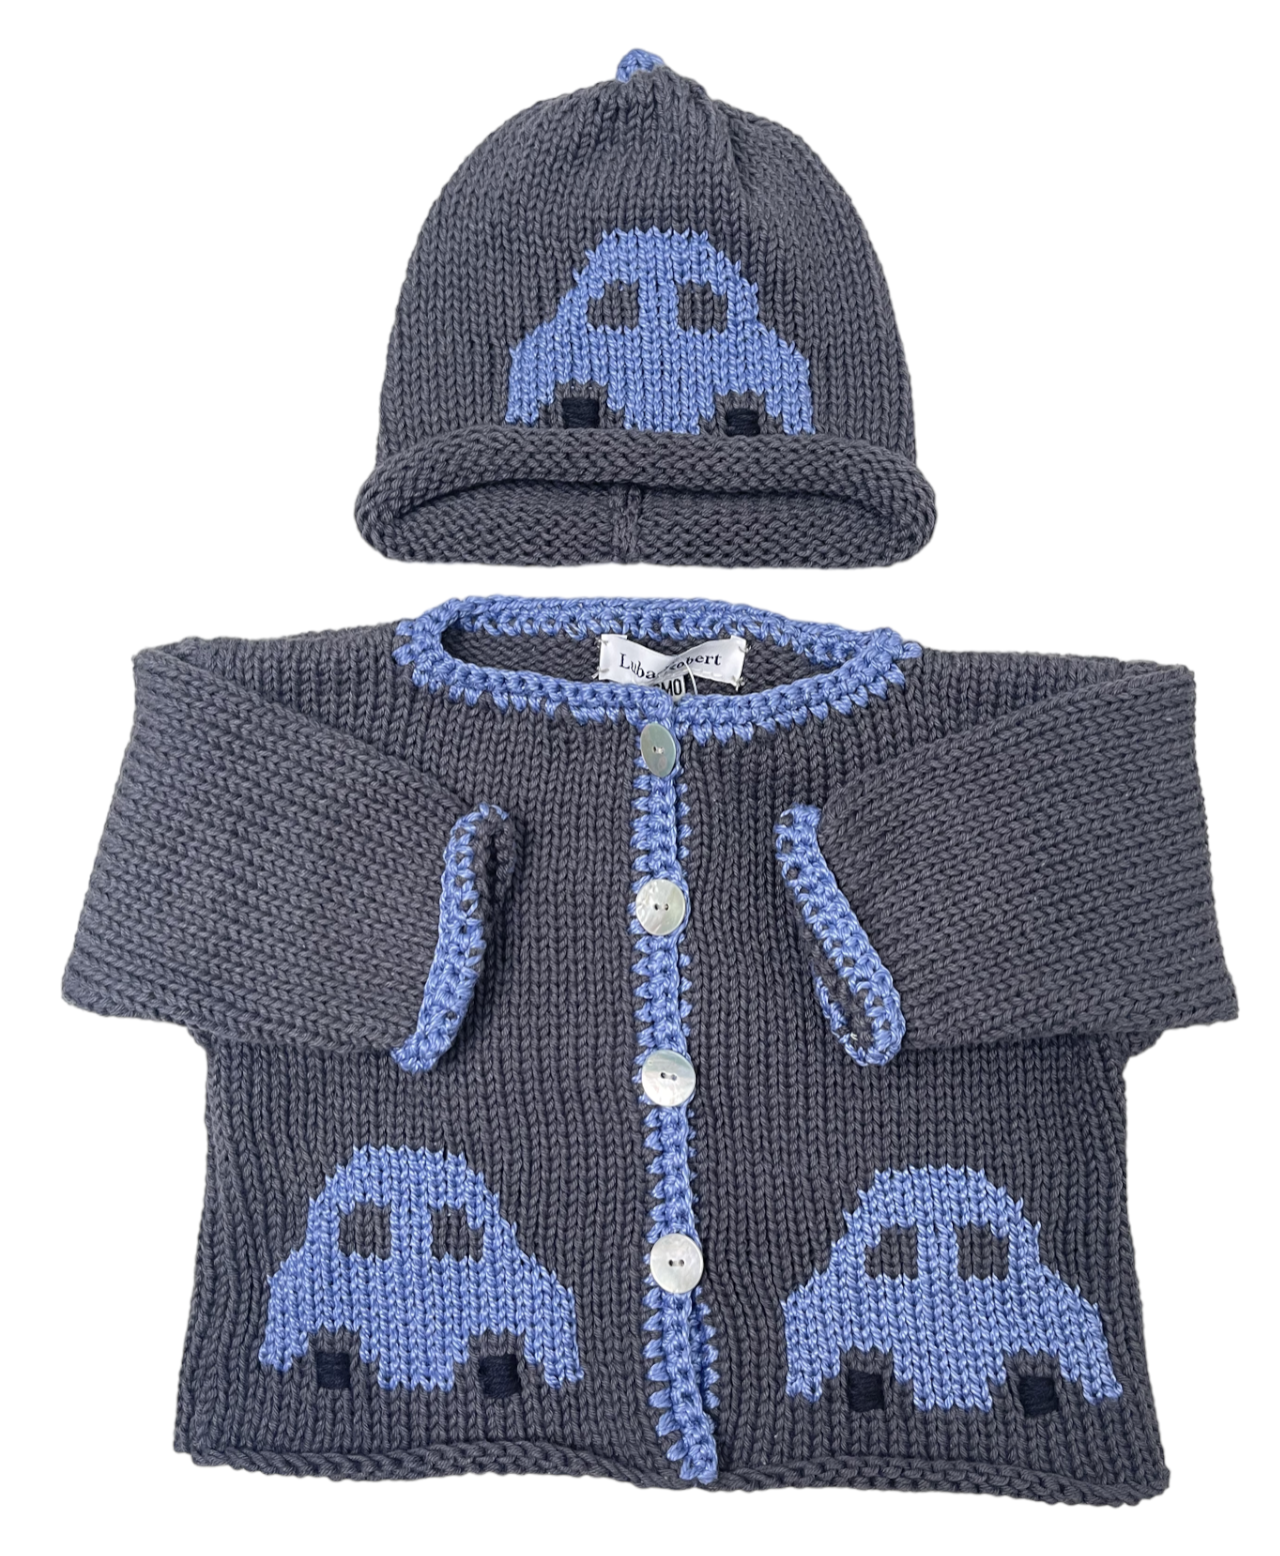 Luba Knit Sweater Set Grey/Blue Car